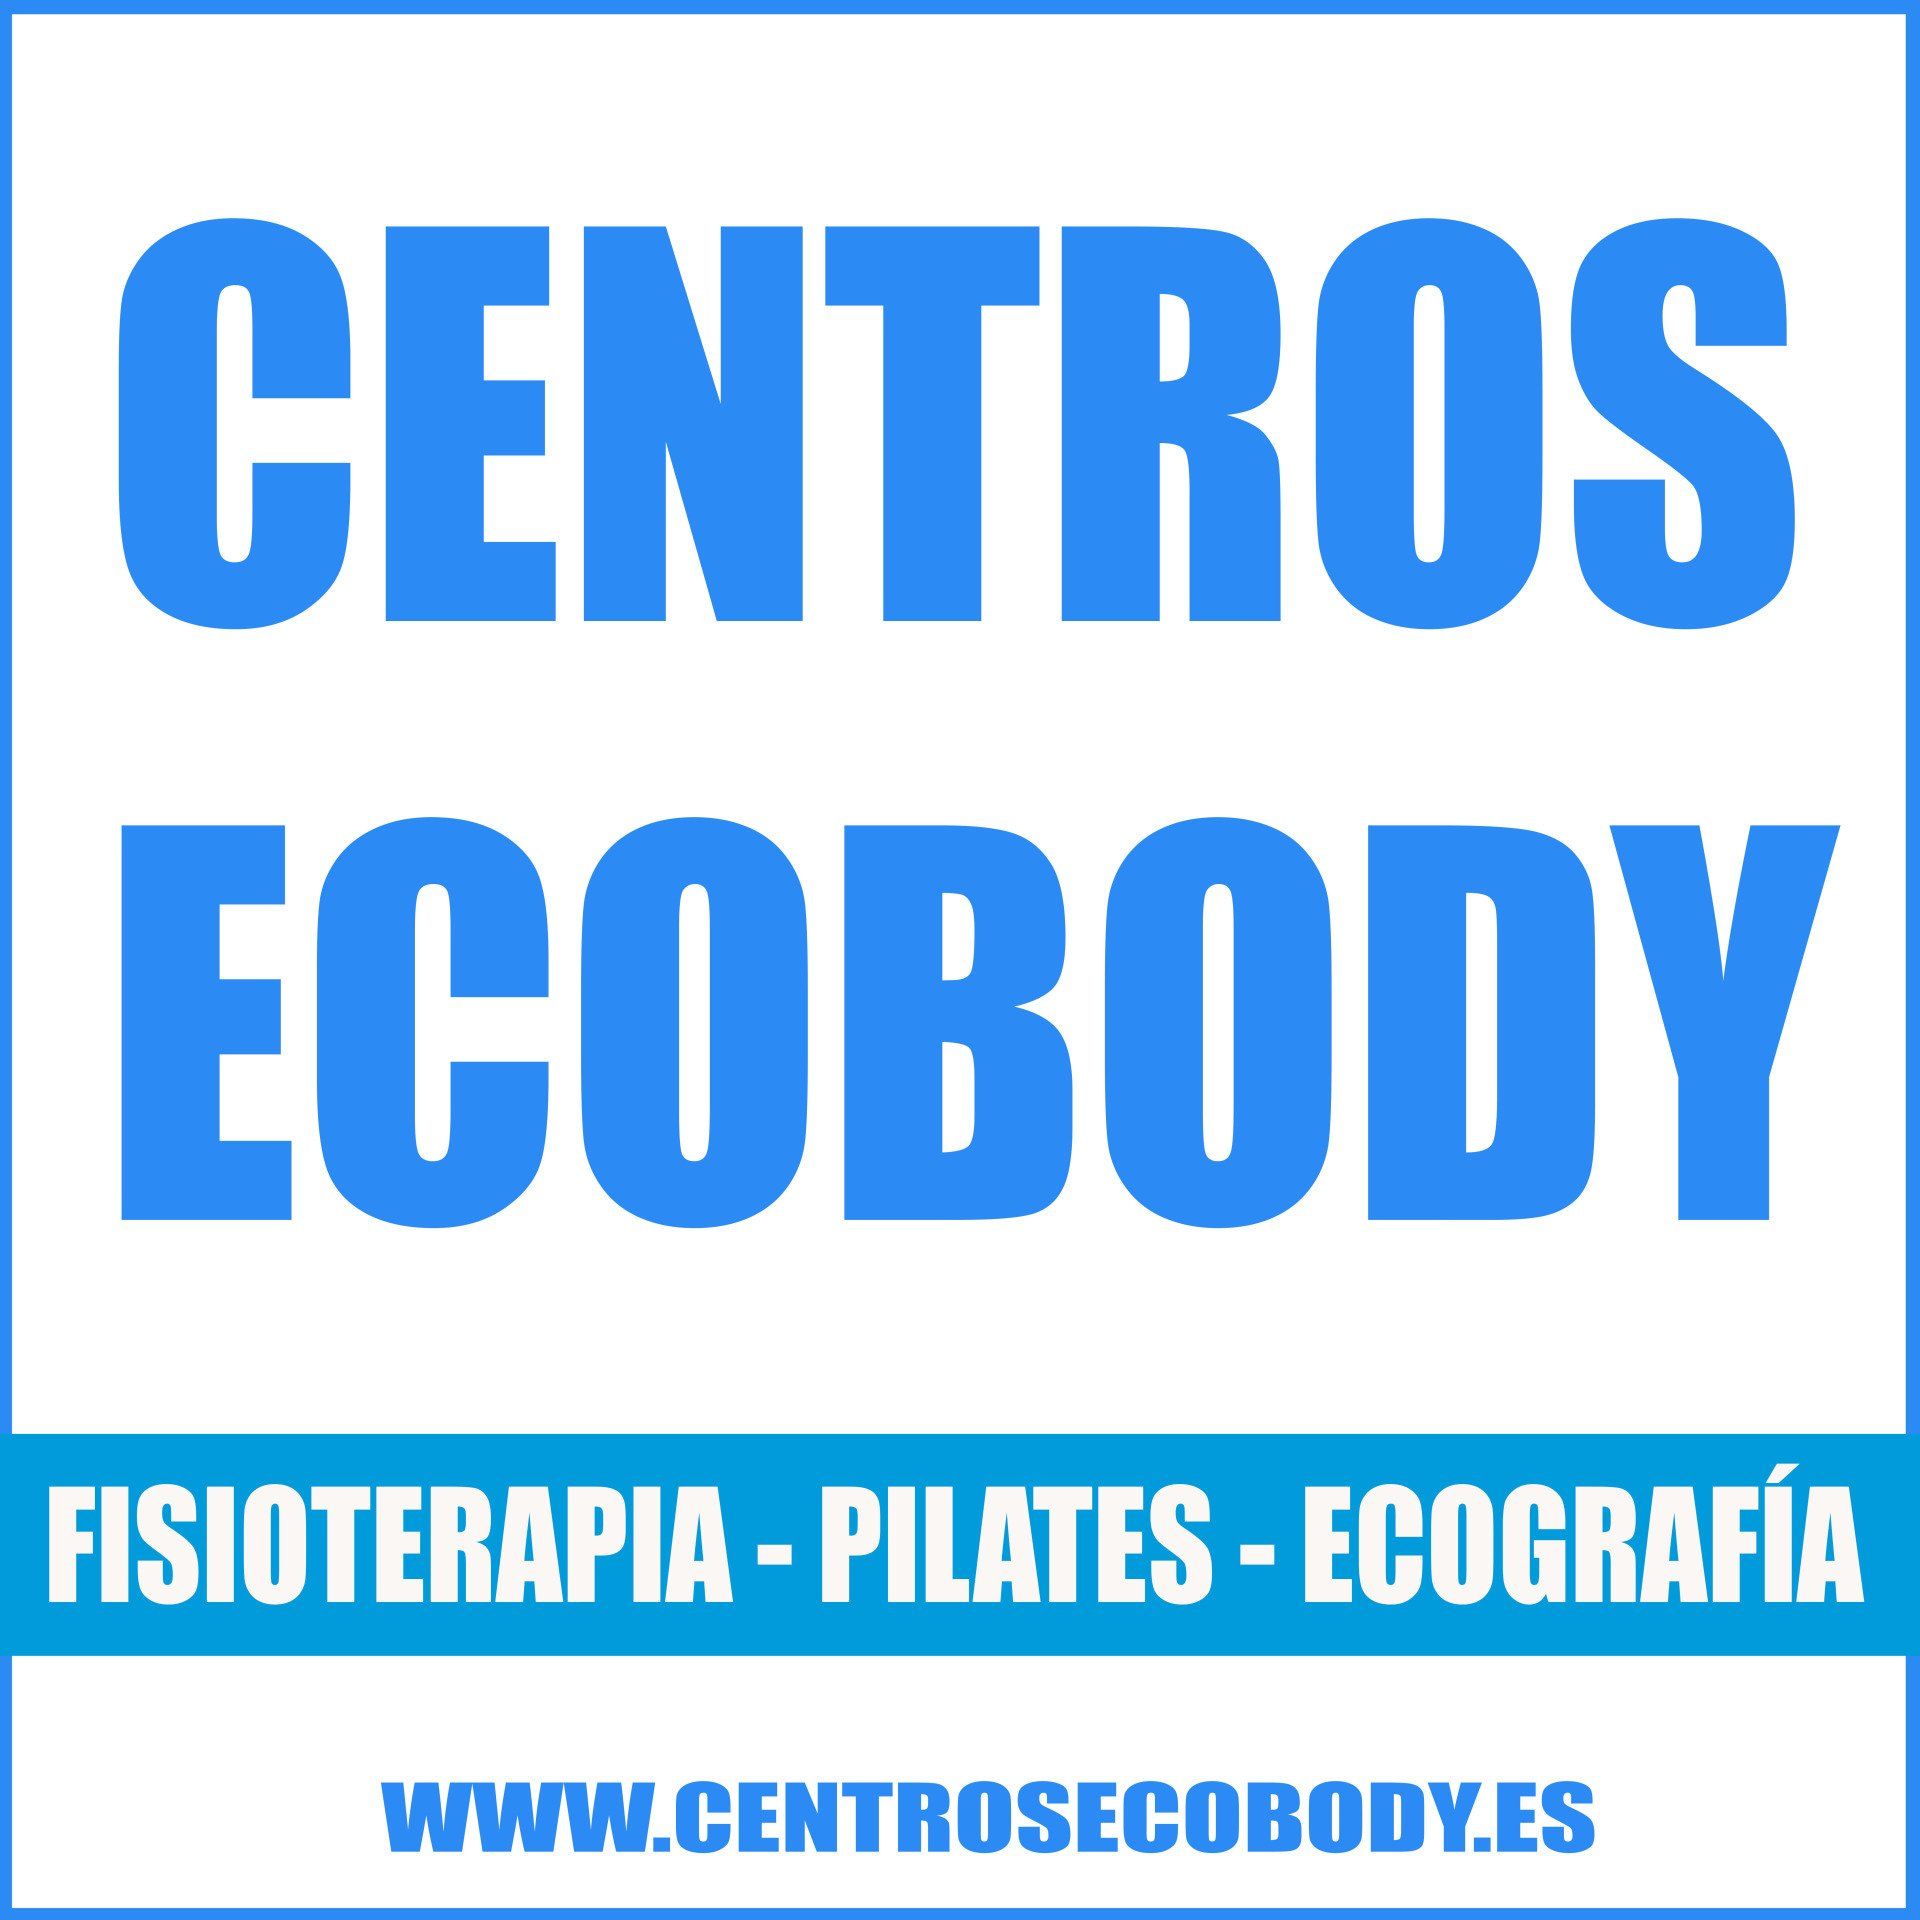 centros ecobody